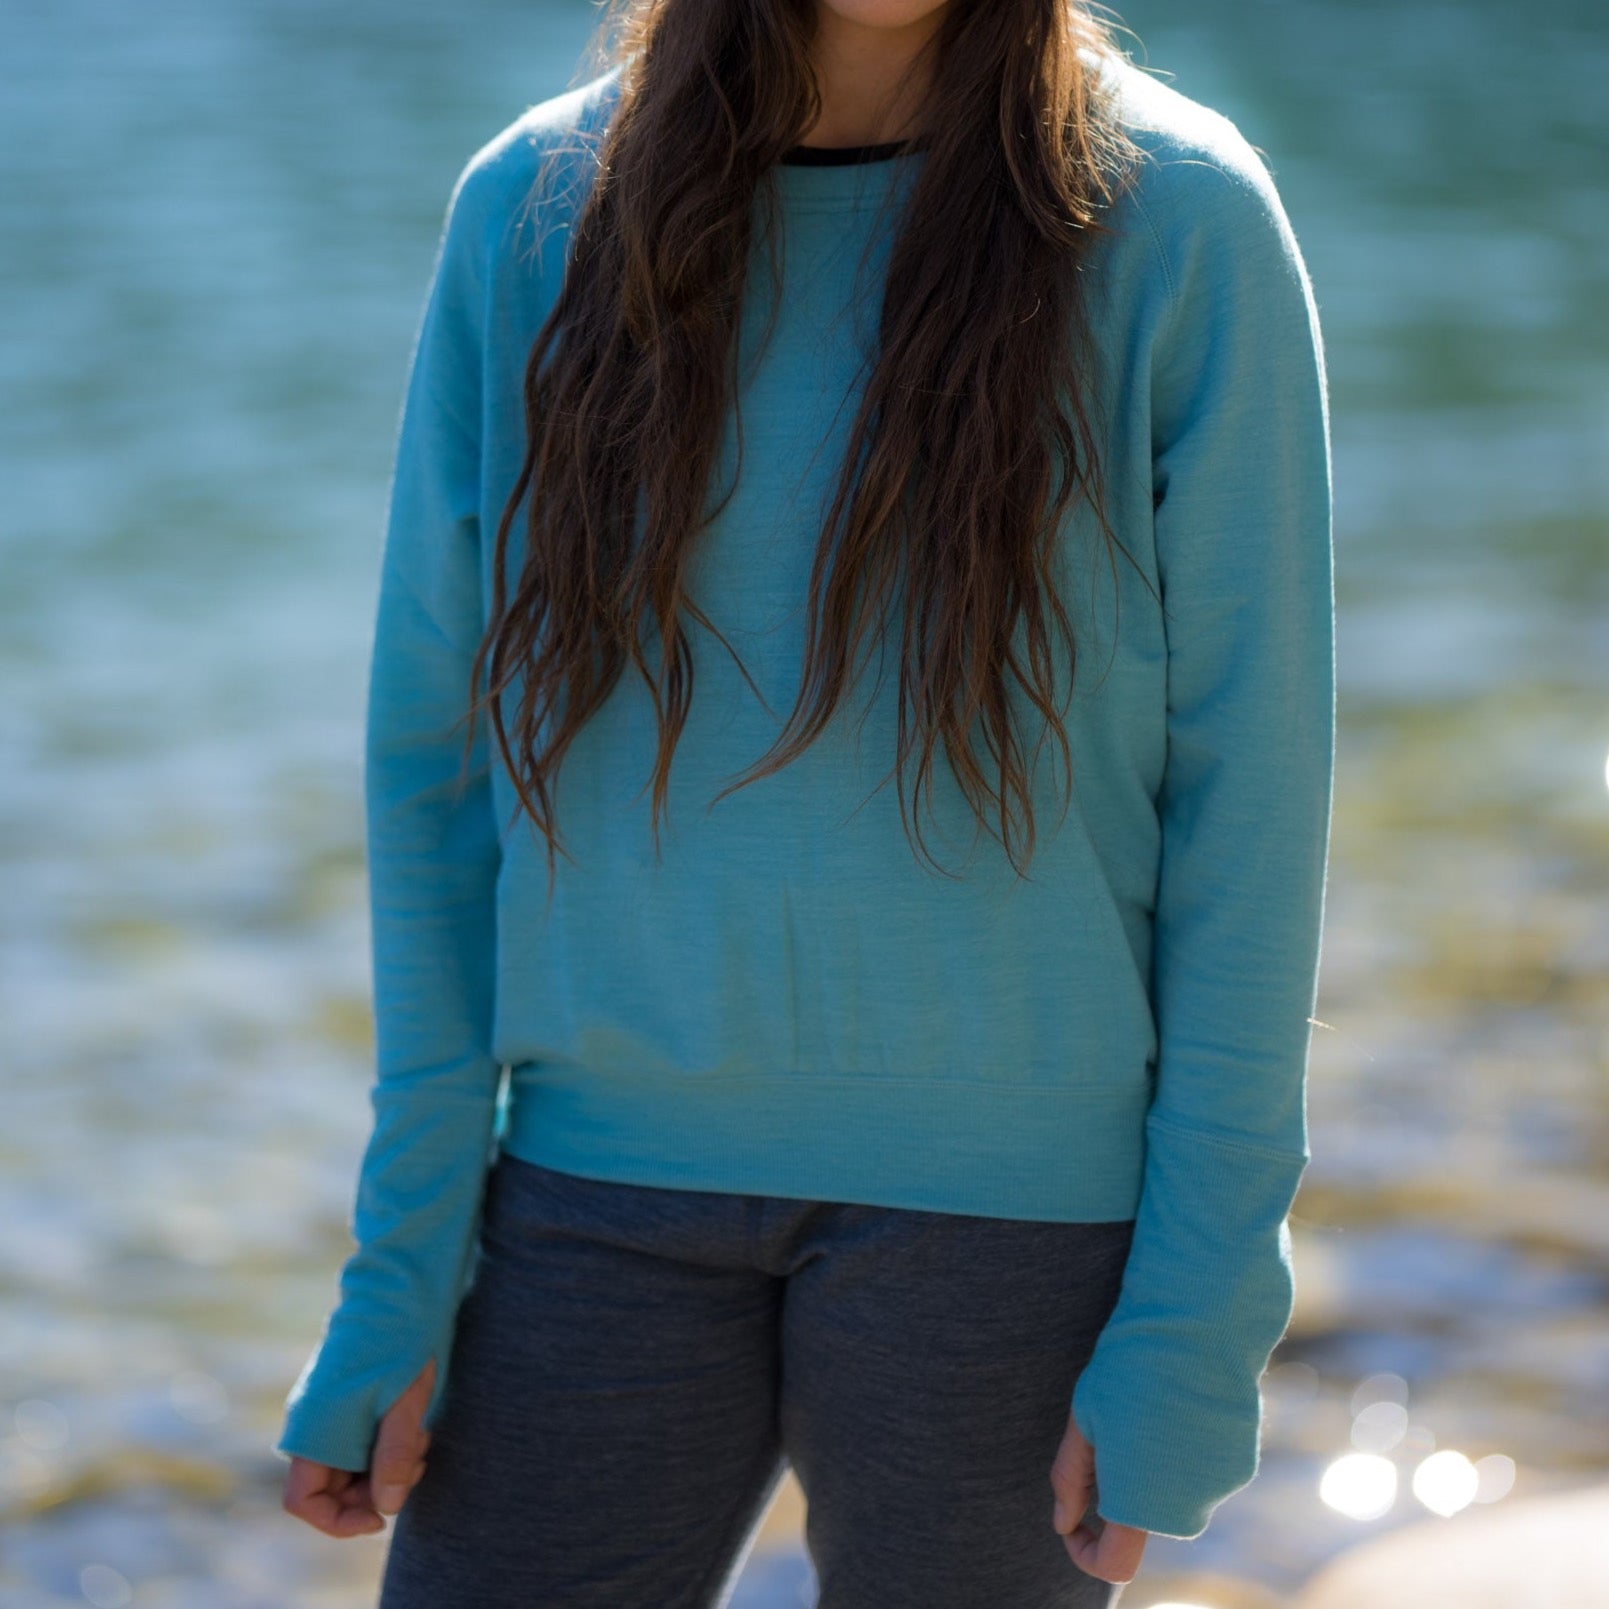 Mineral blue Natural Tencel sweatshirt on a woman